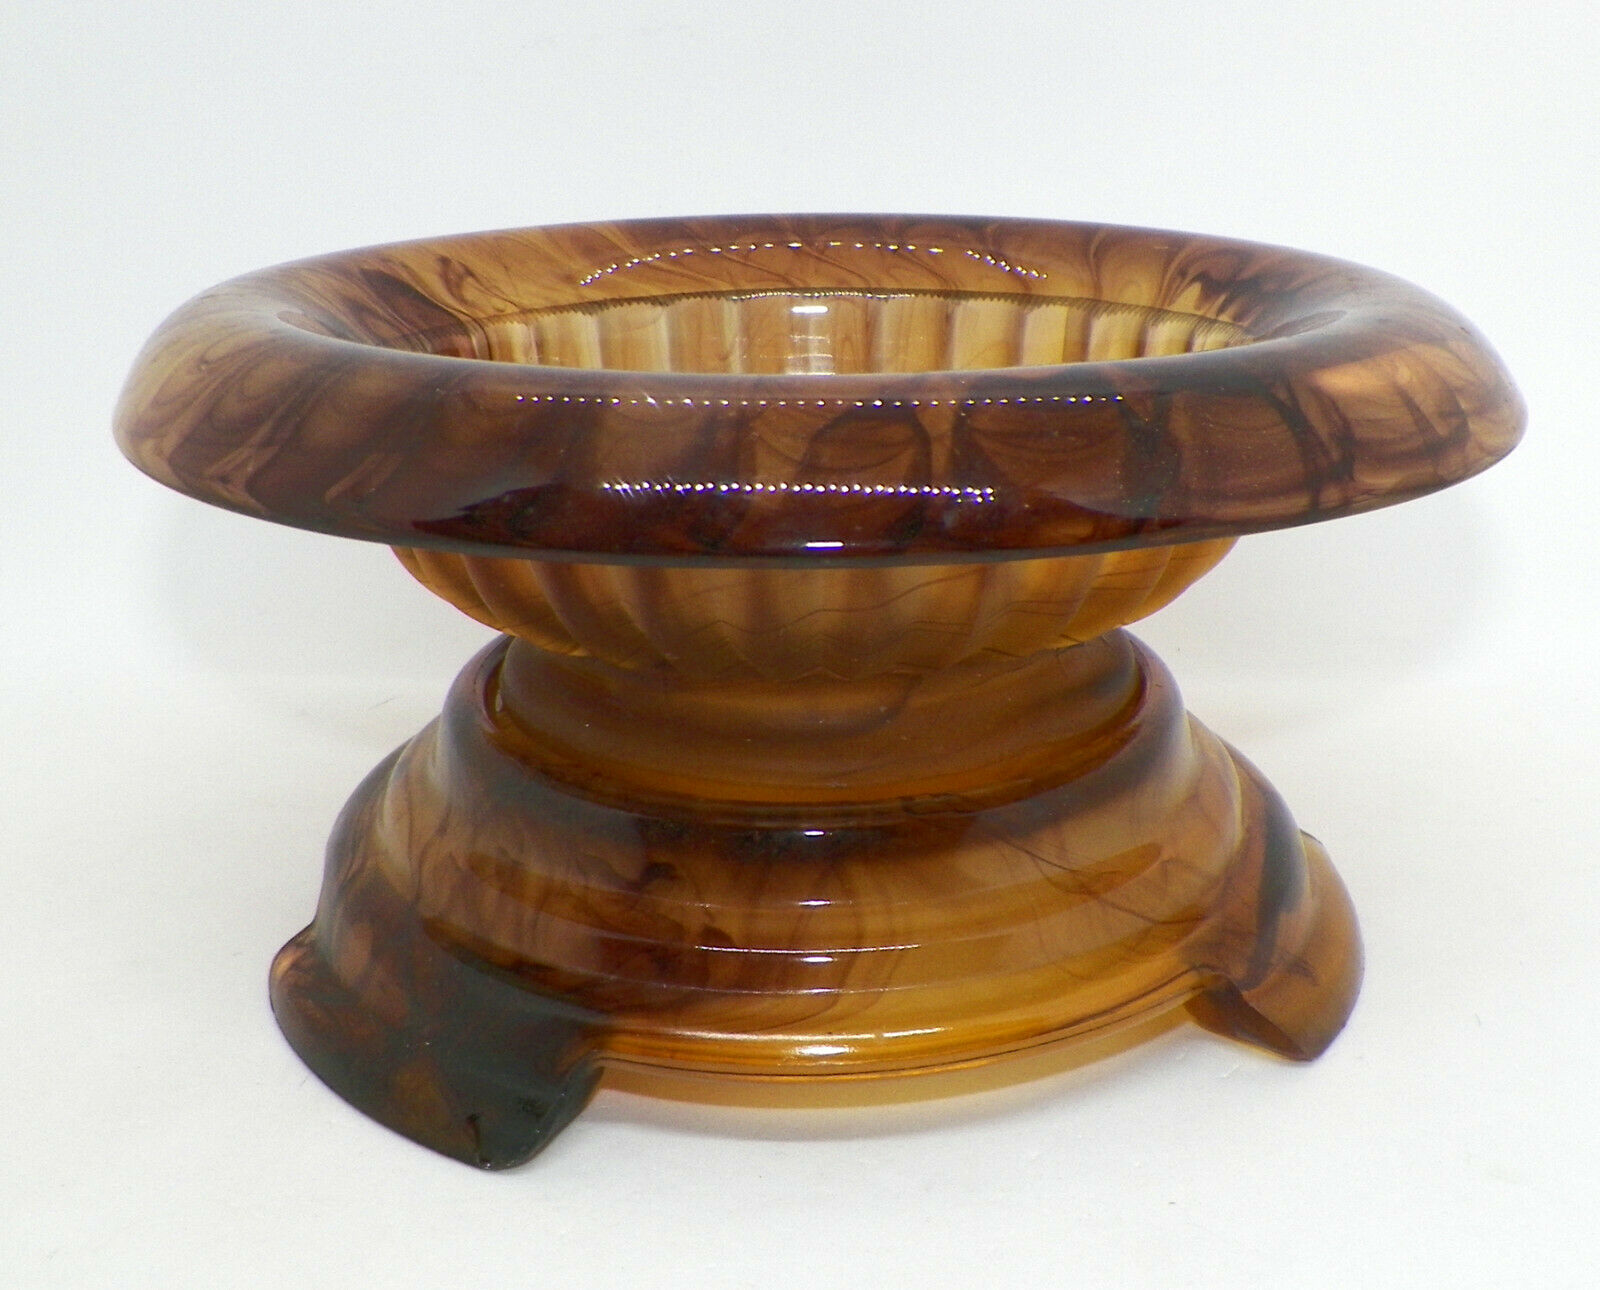 Vintage Rolled Slag Glass Centerpiece Console Bowl on Base, tortoise brown